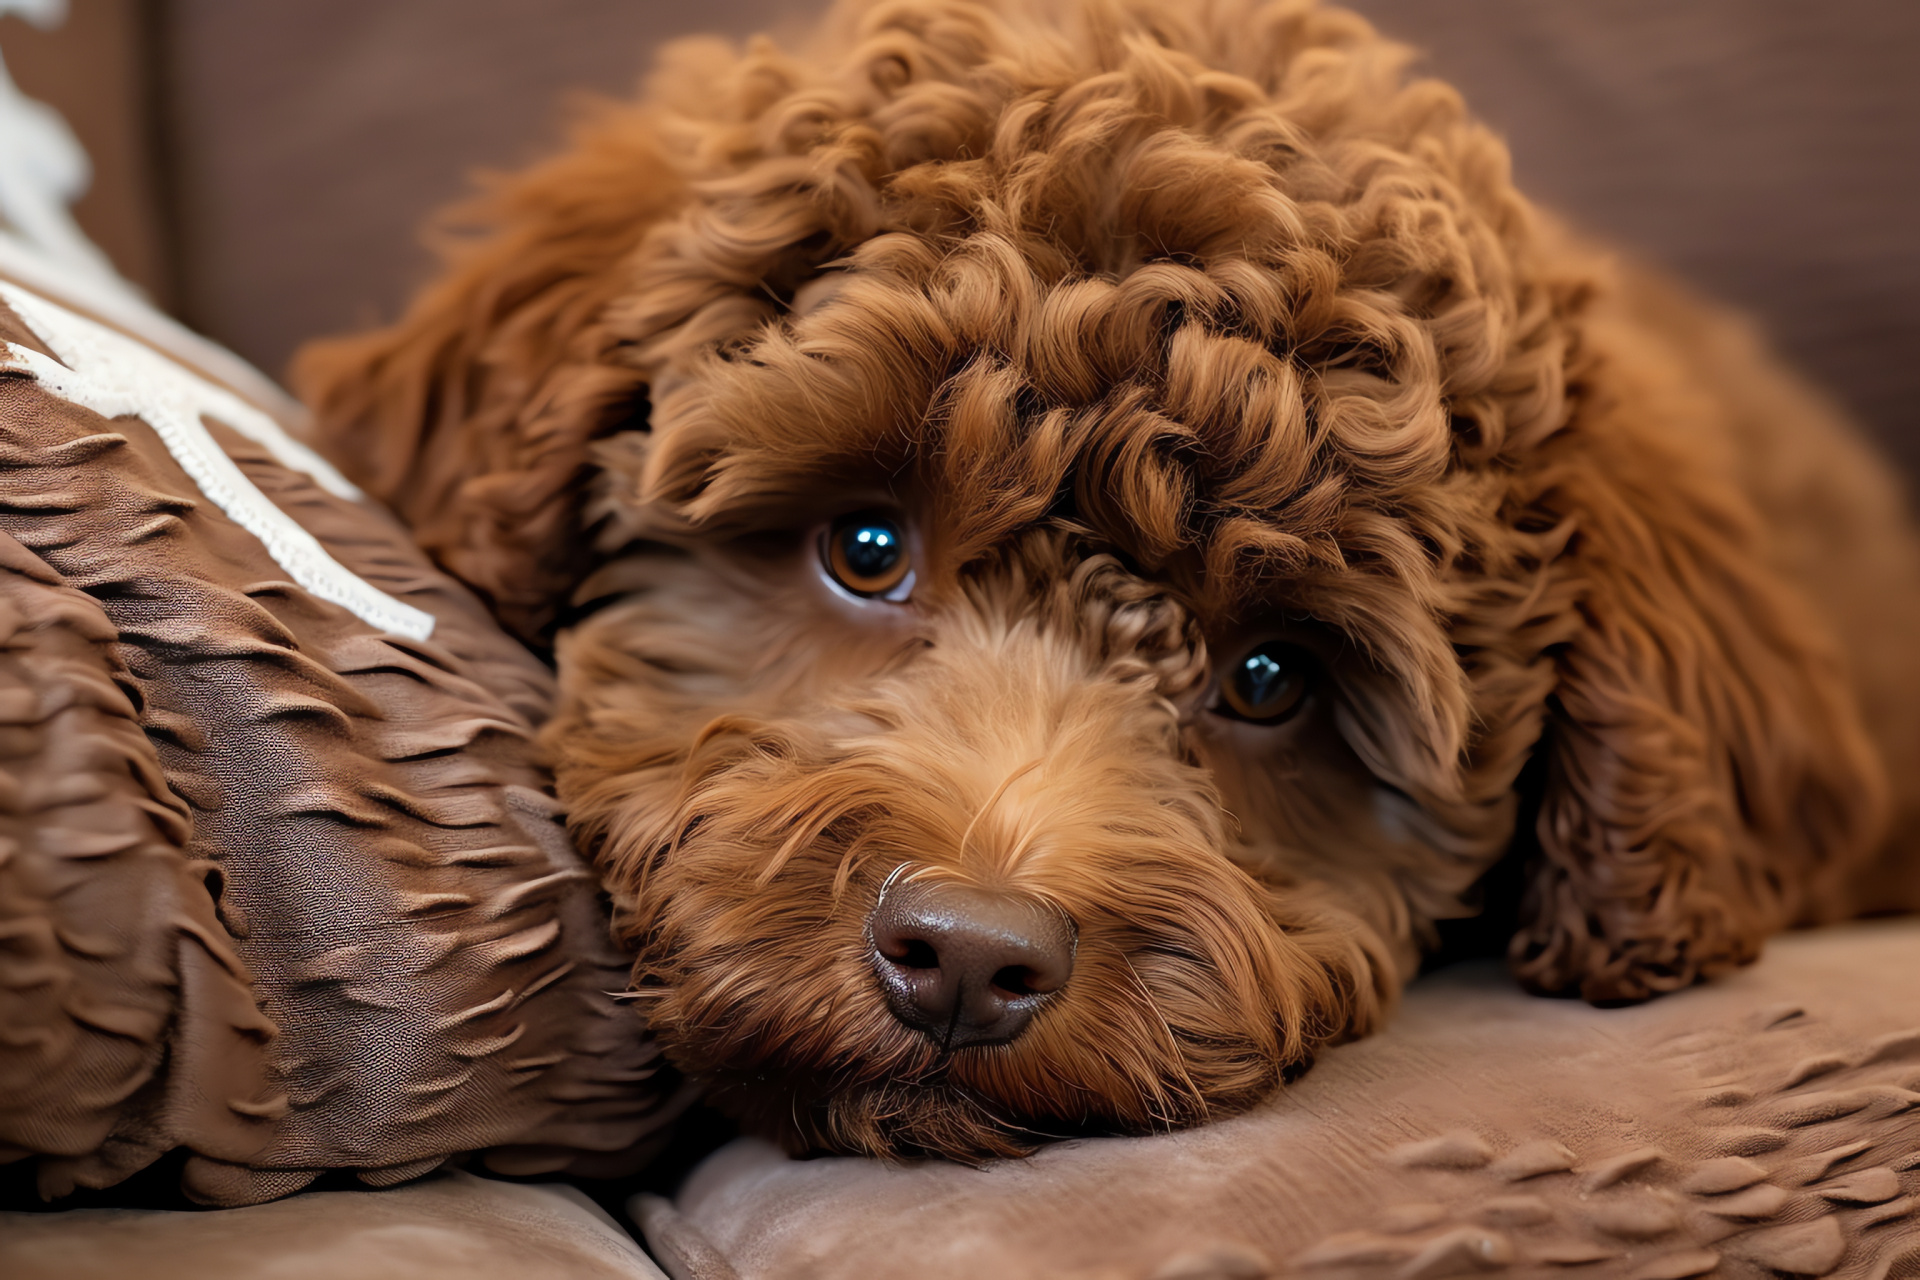 Poodle canine characteristics, Poodle velvety texture, Chocolate fur Poodle, Brown-eyed Poodle, Companion Poodle, HD Desktop Image